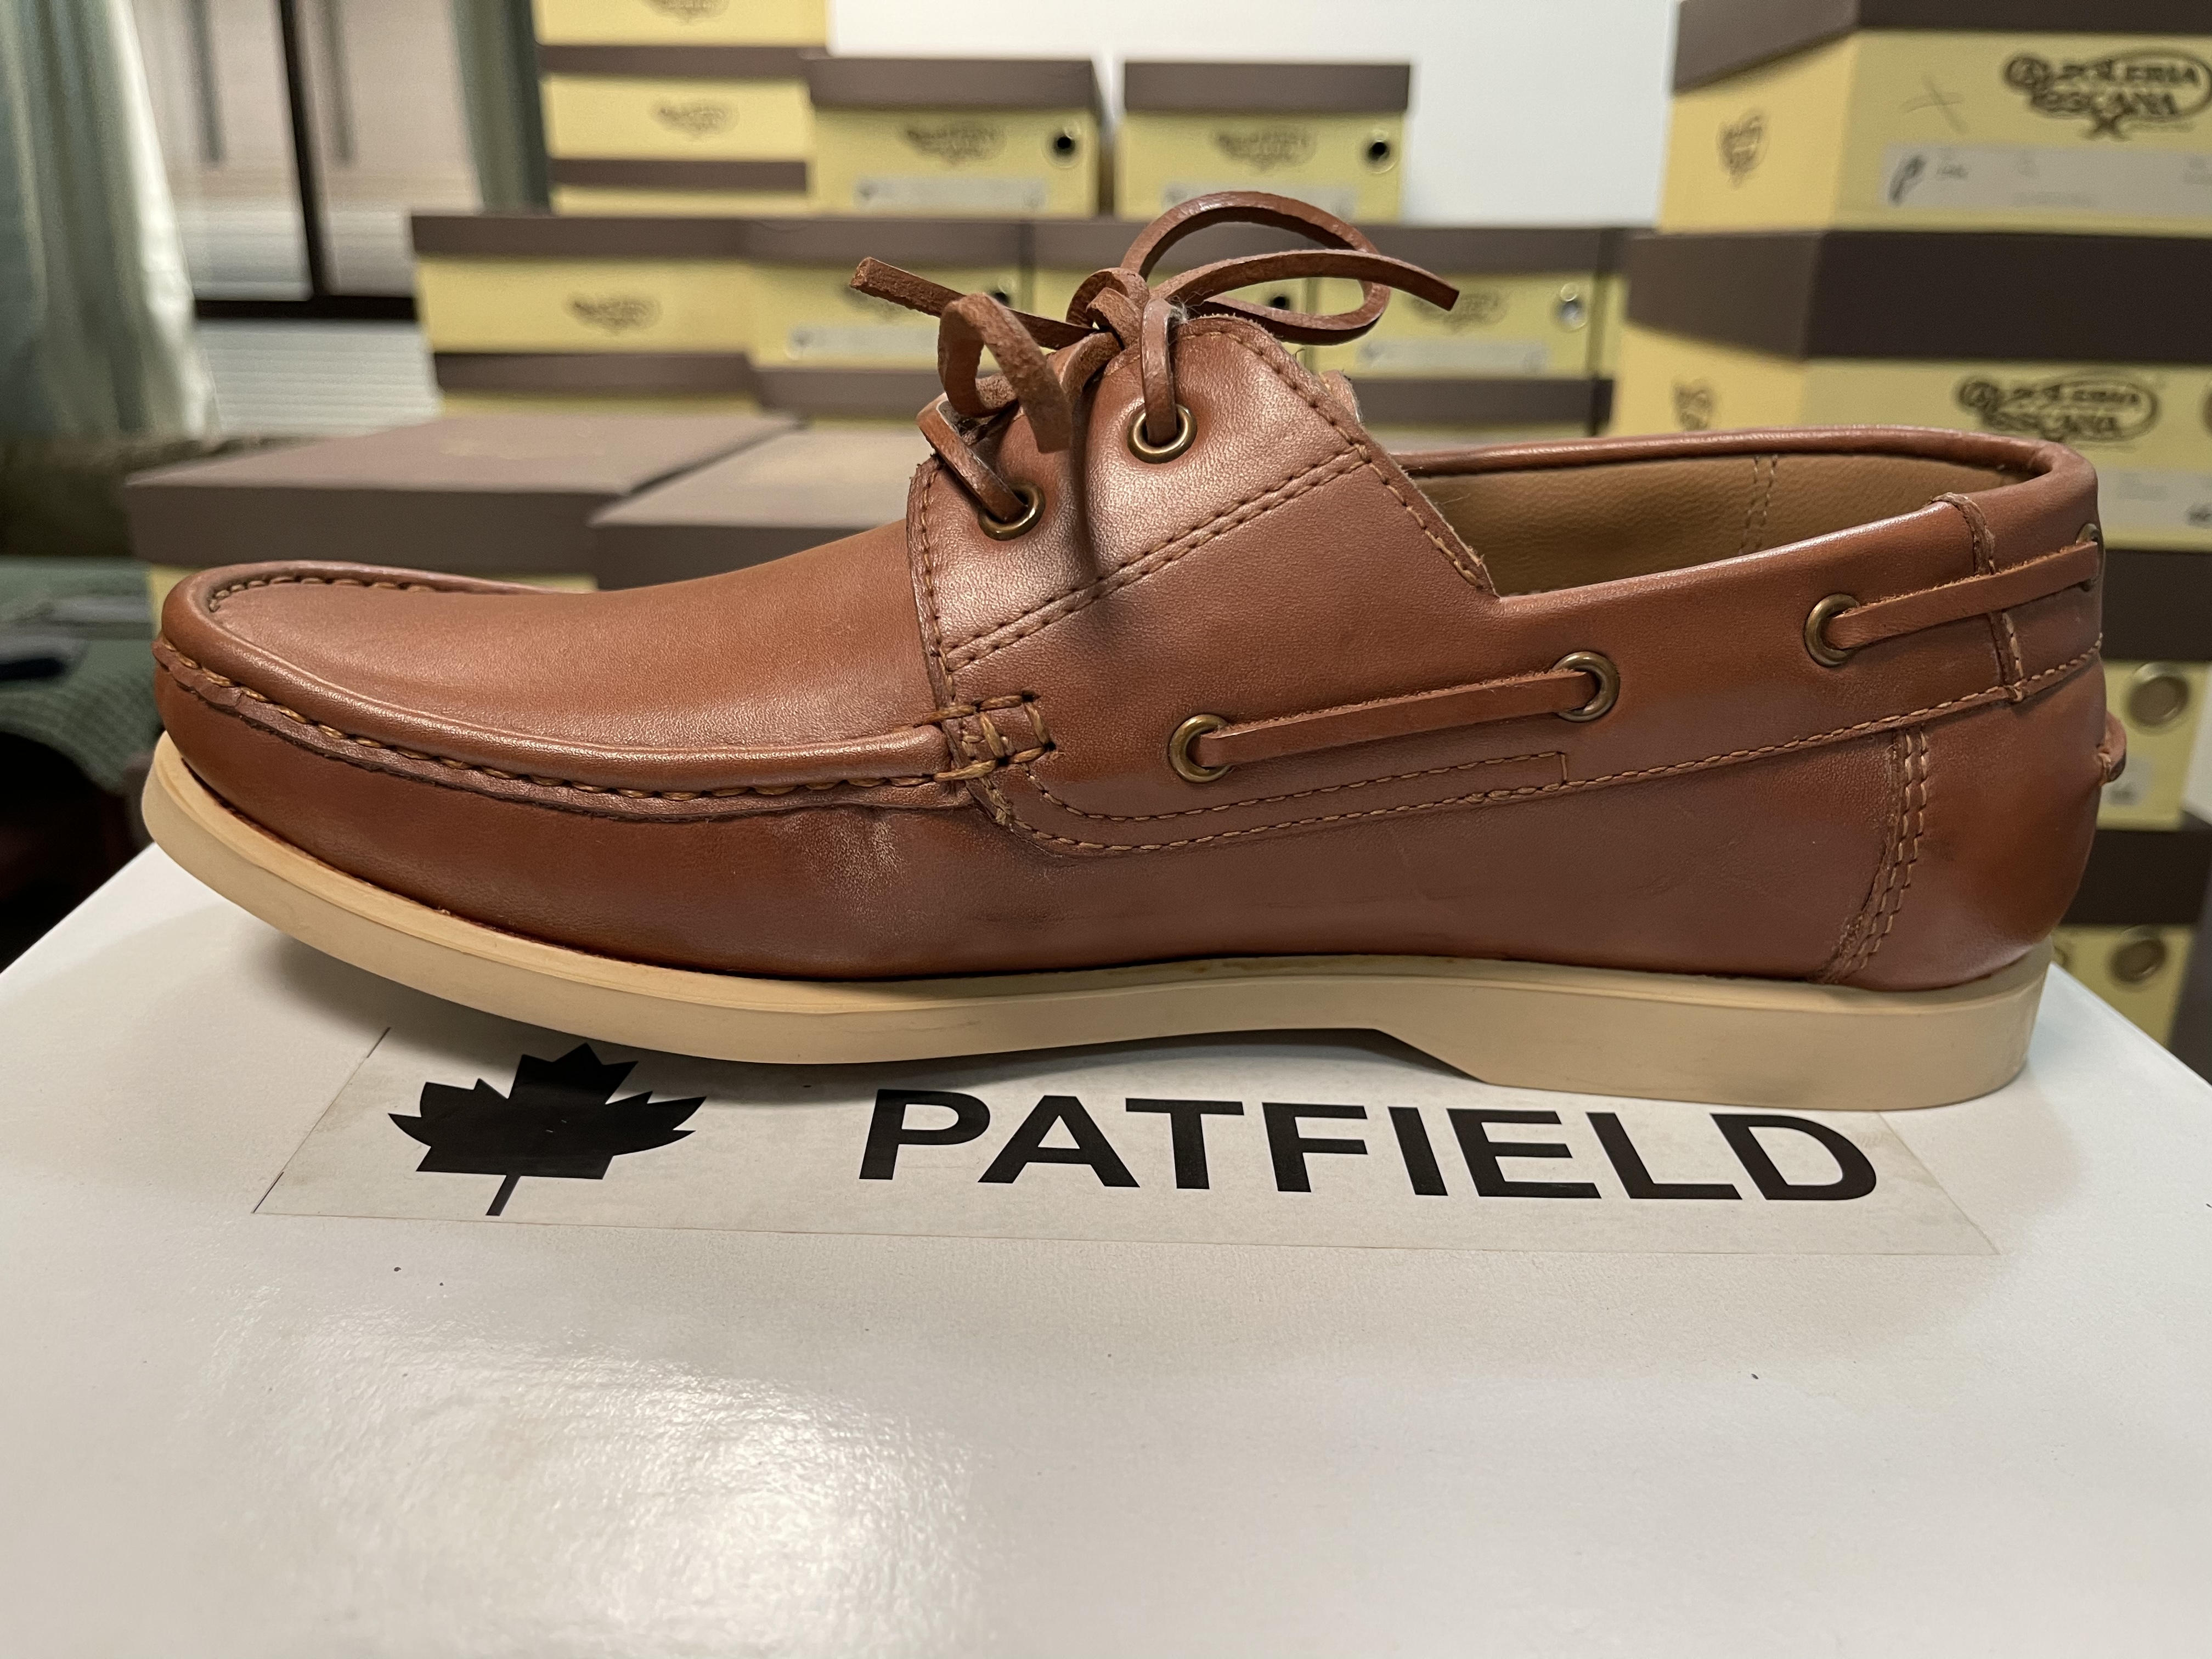 patfield shoes